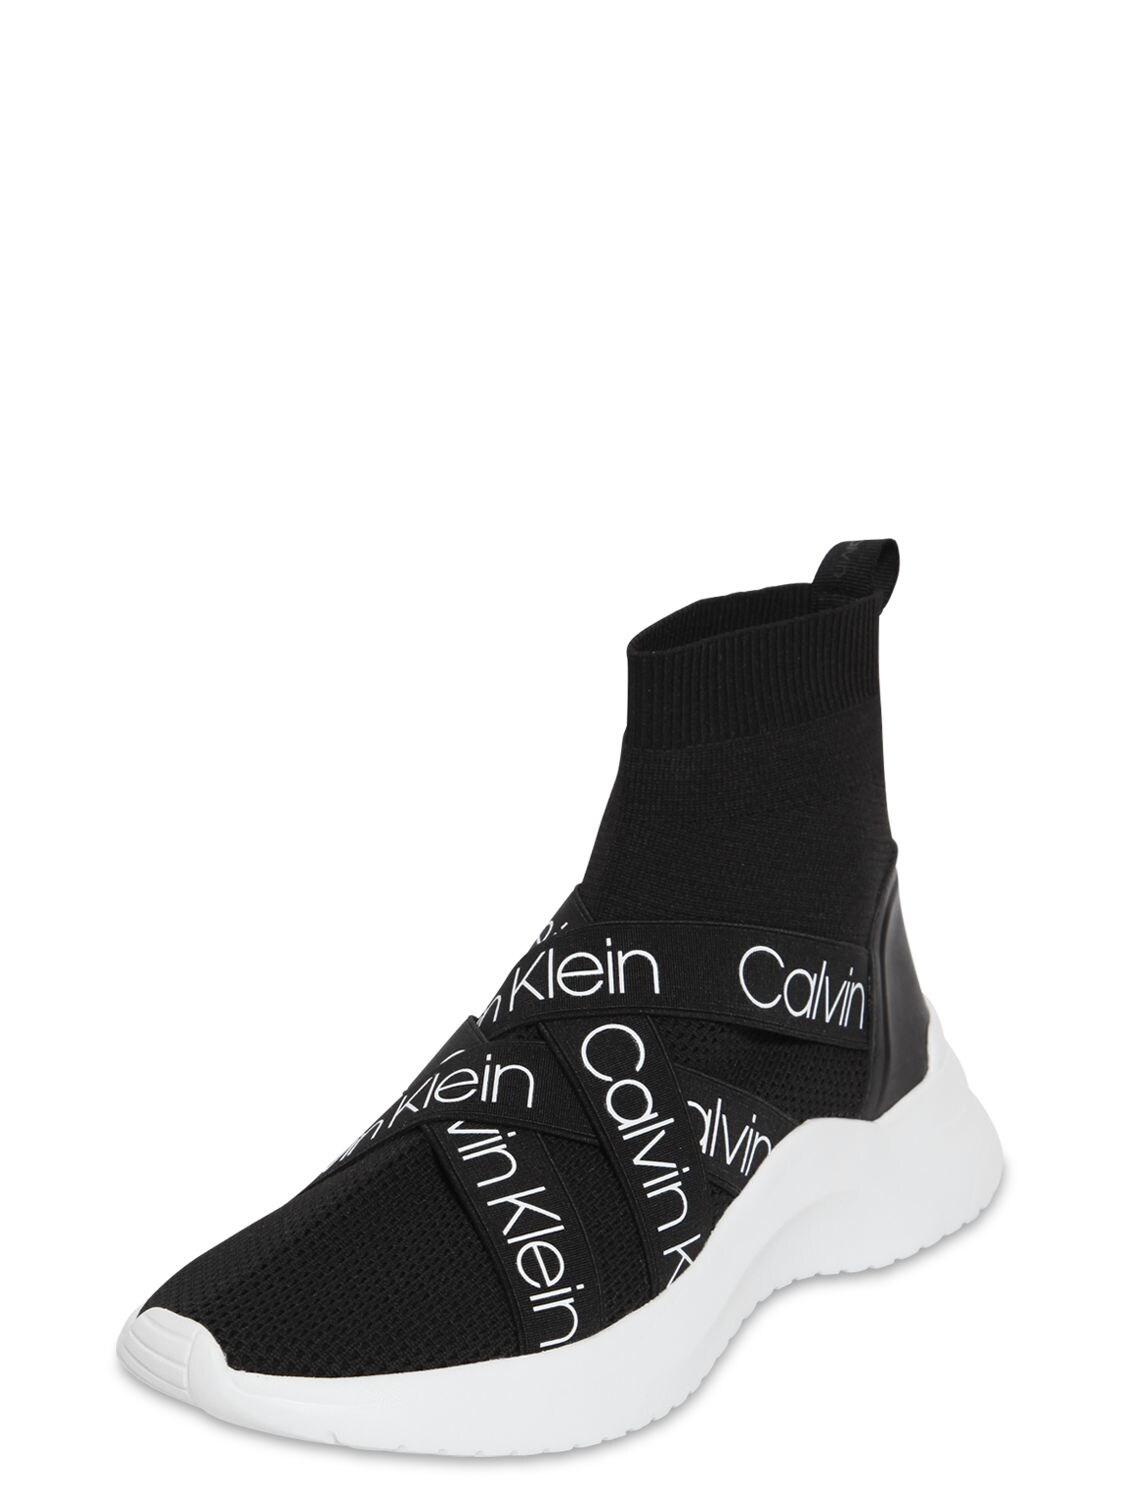 Calvin Klein Leather 30mm Umney Knit Sock Sneakers in Black/White (Black) |  Lyst